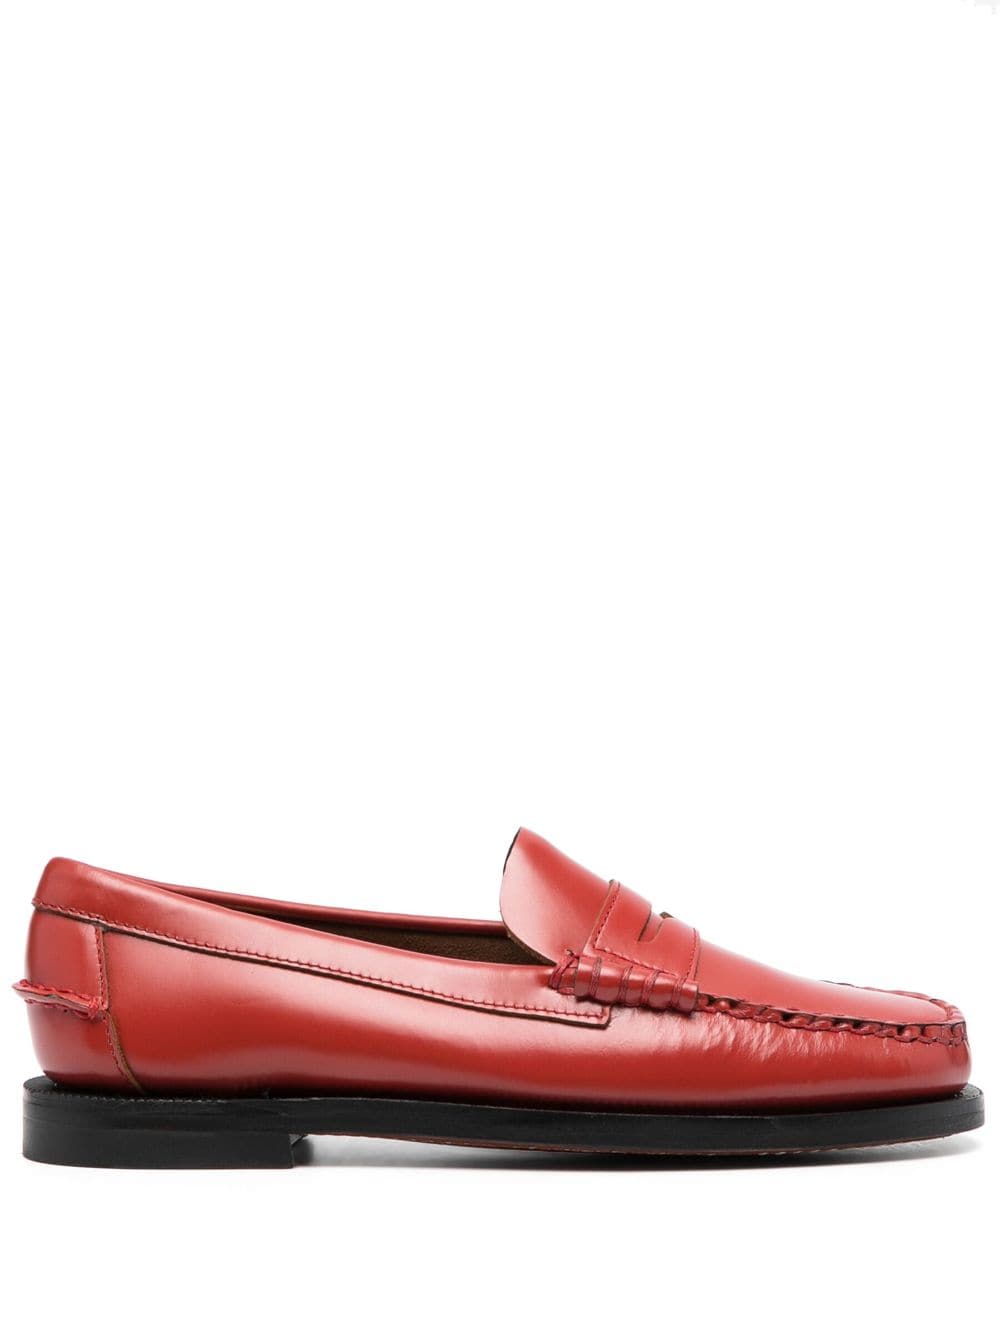 Sebago slip-on style loafers - Red von Sebago